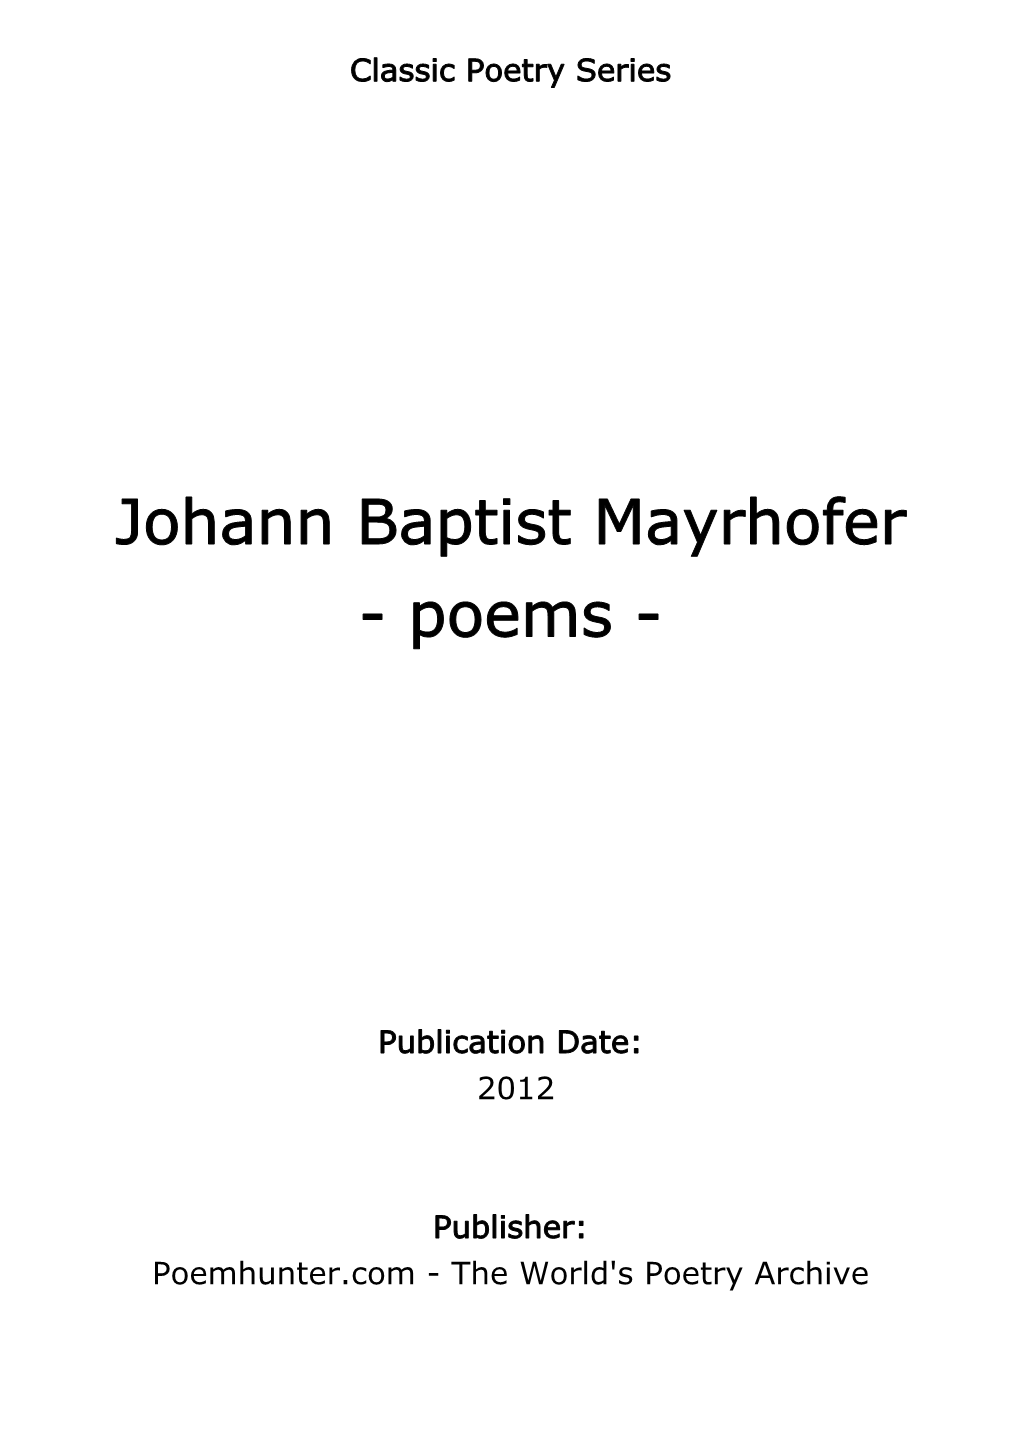 Johann Baptist Mayrhofer - Poems